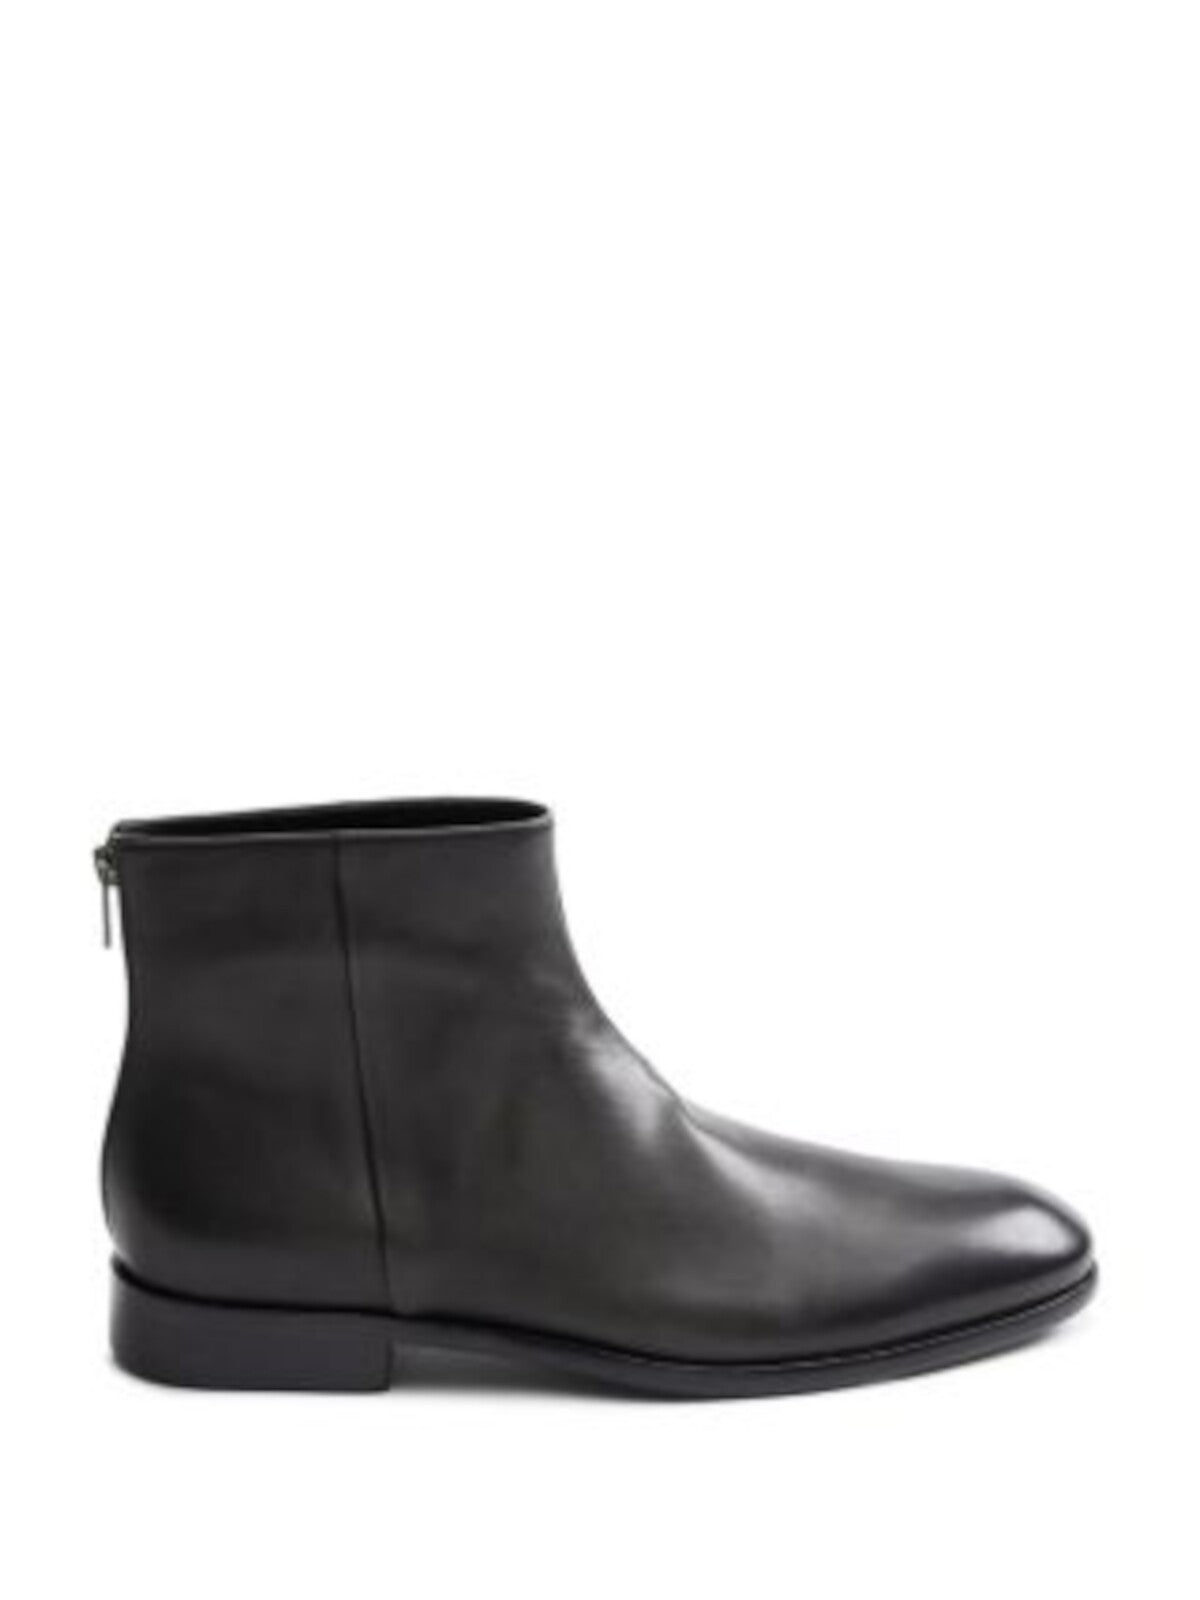 JOHN VARVATOS Mens Black Comfort Nyc Round Toe Block Heel Zip-Up Leather Boots Shoes 10.5 M